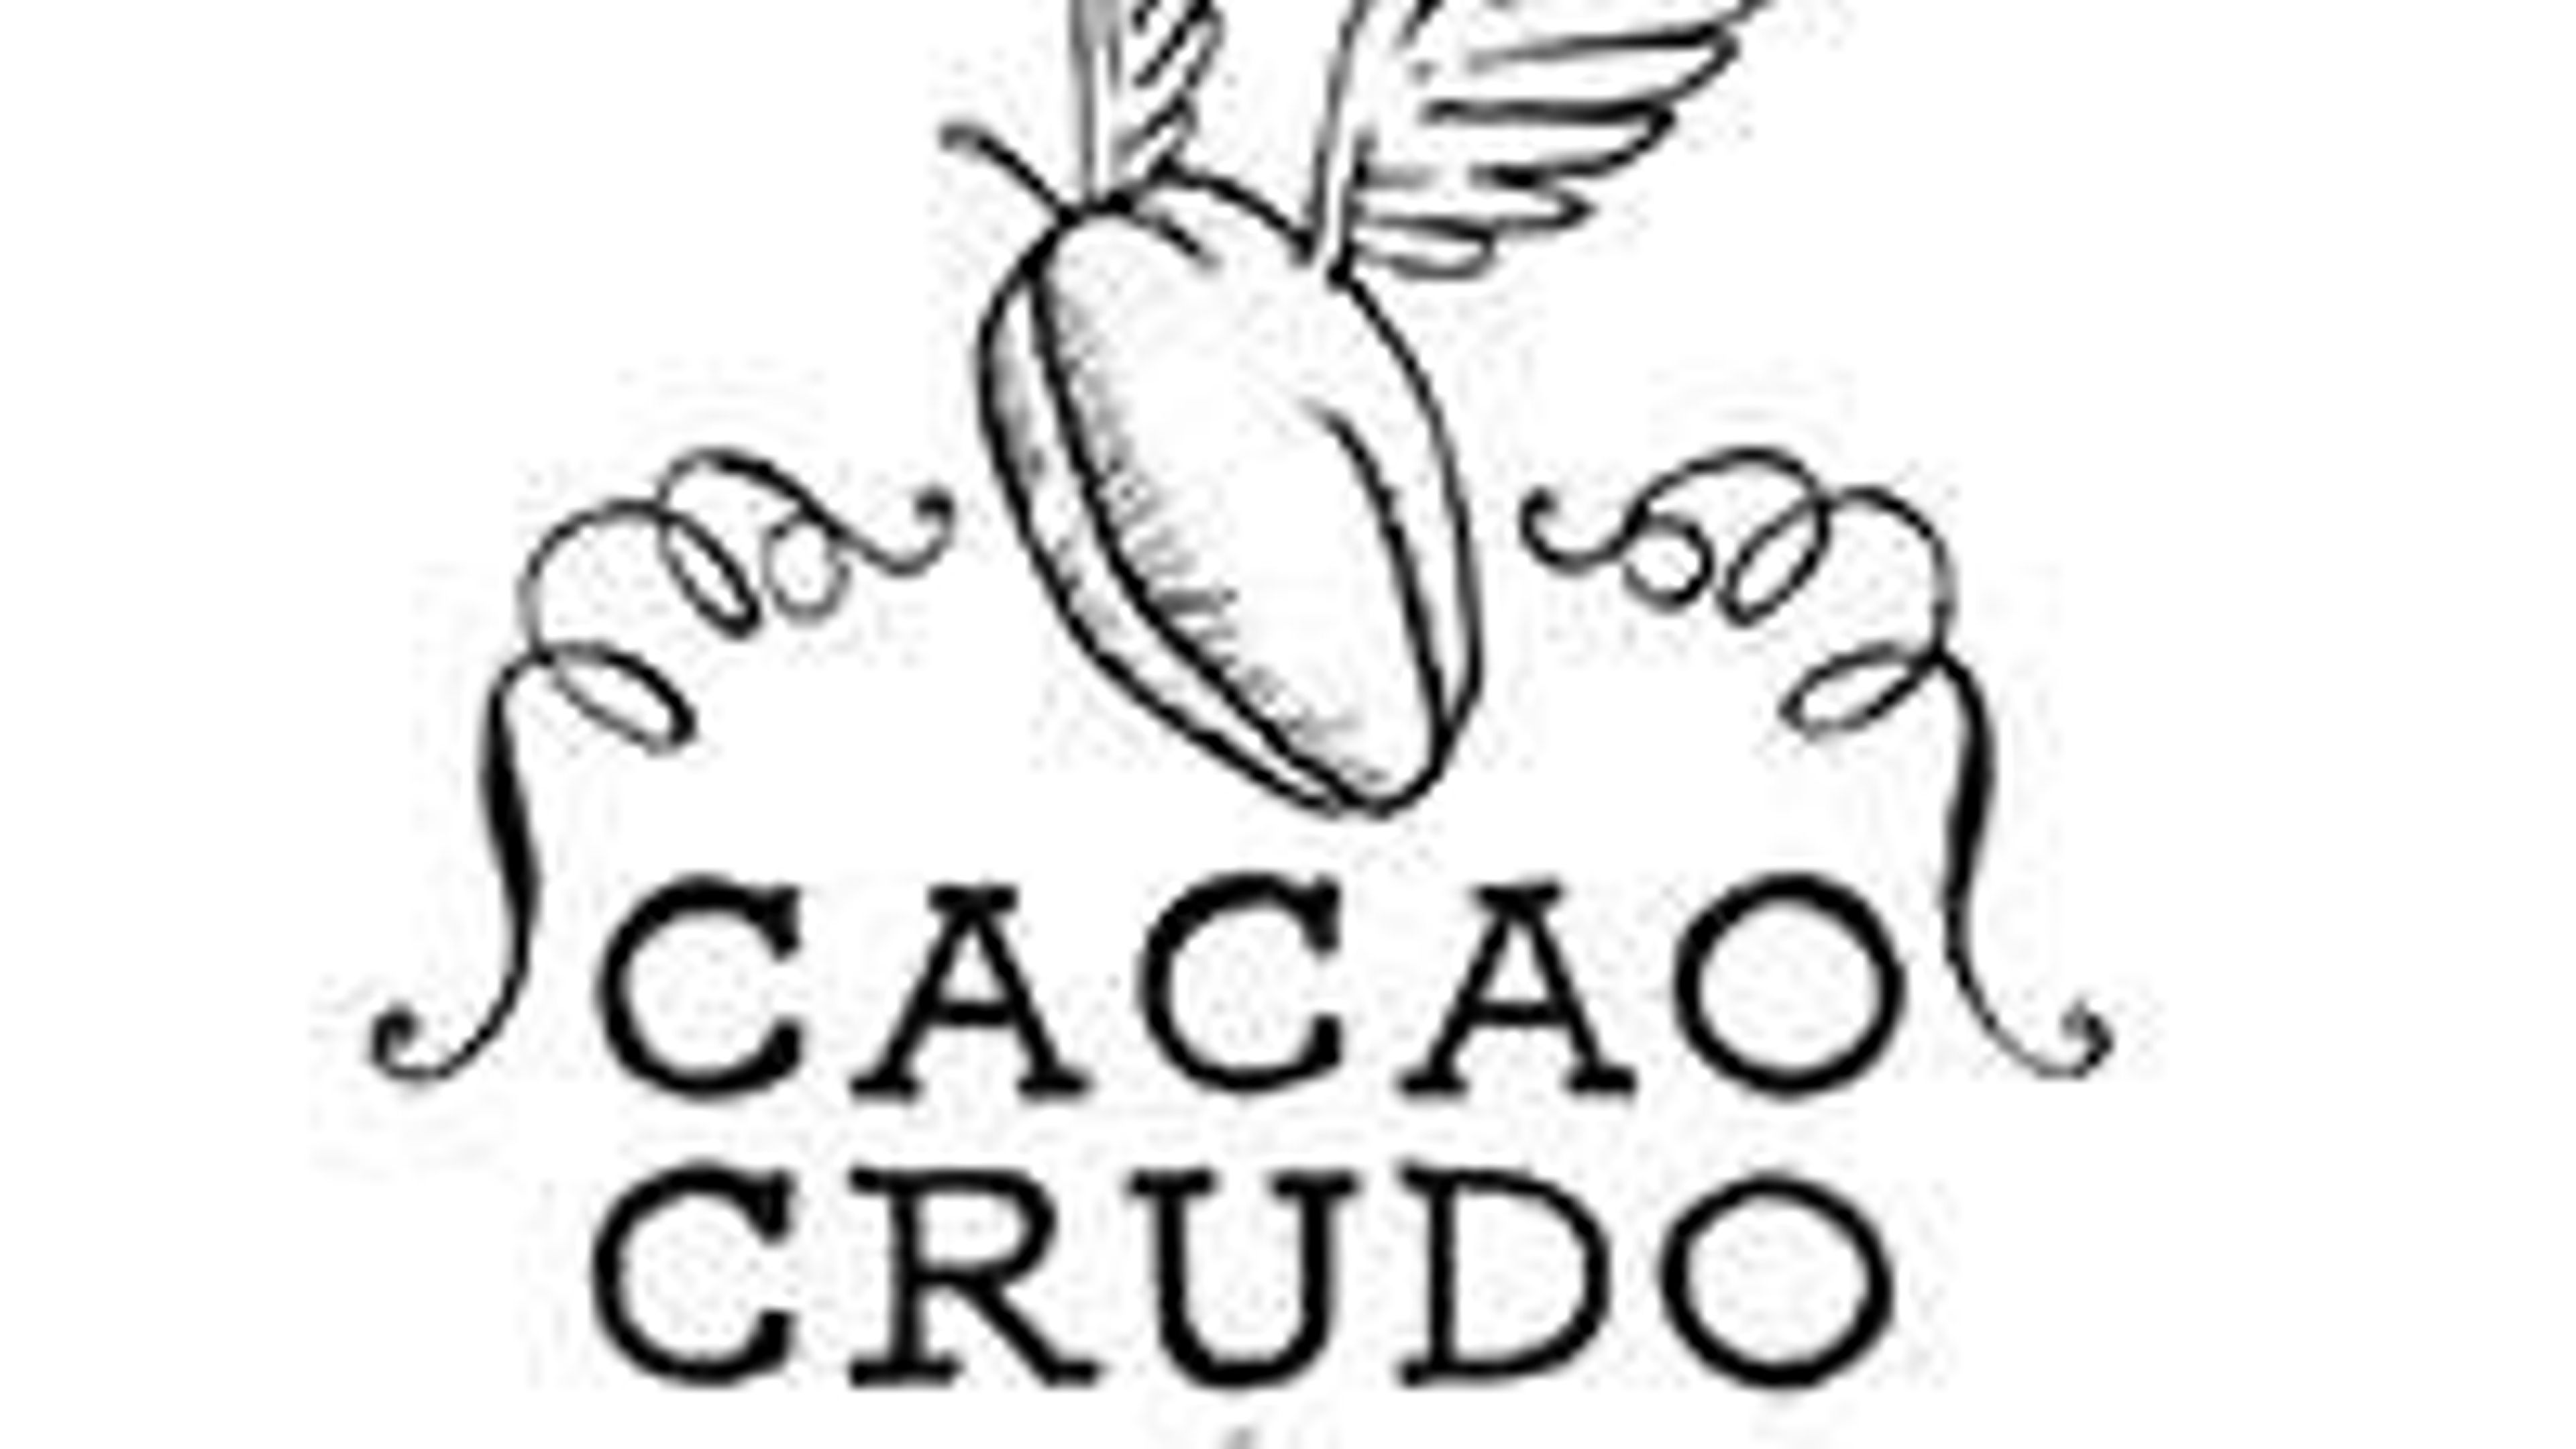 CiboCrudo e Cacao Crudo